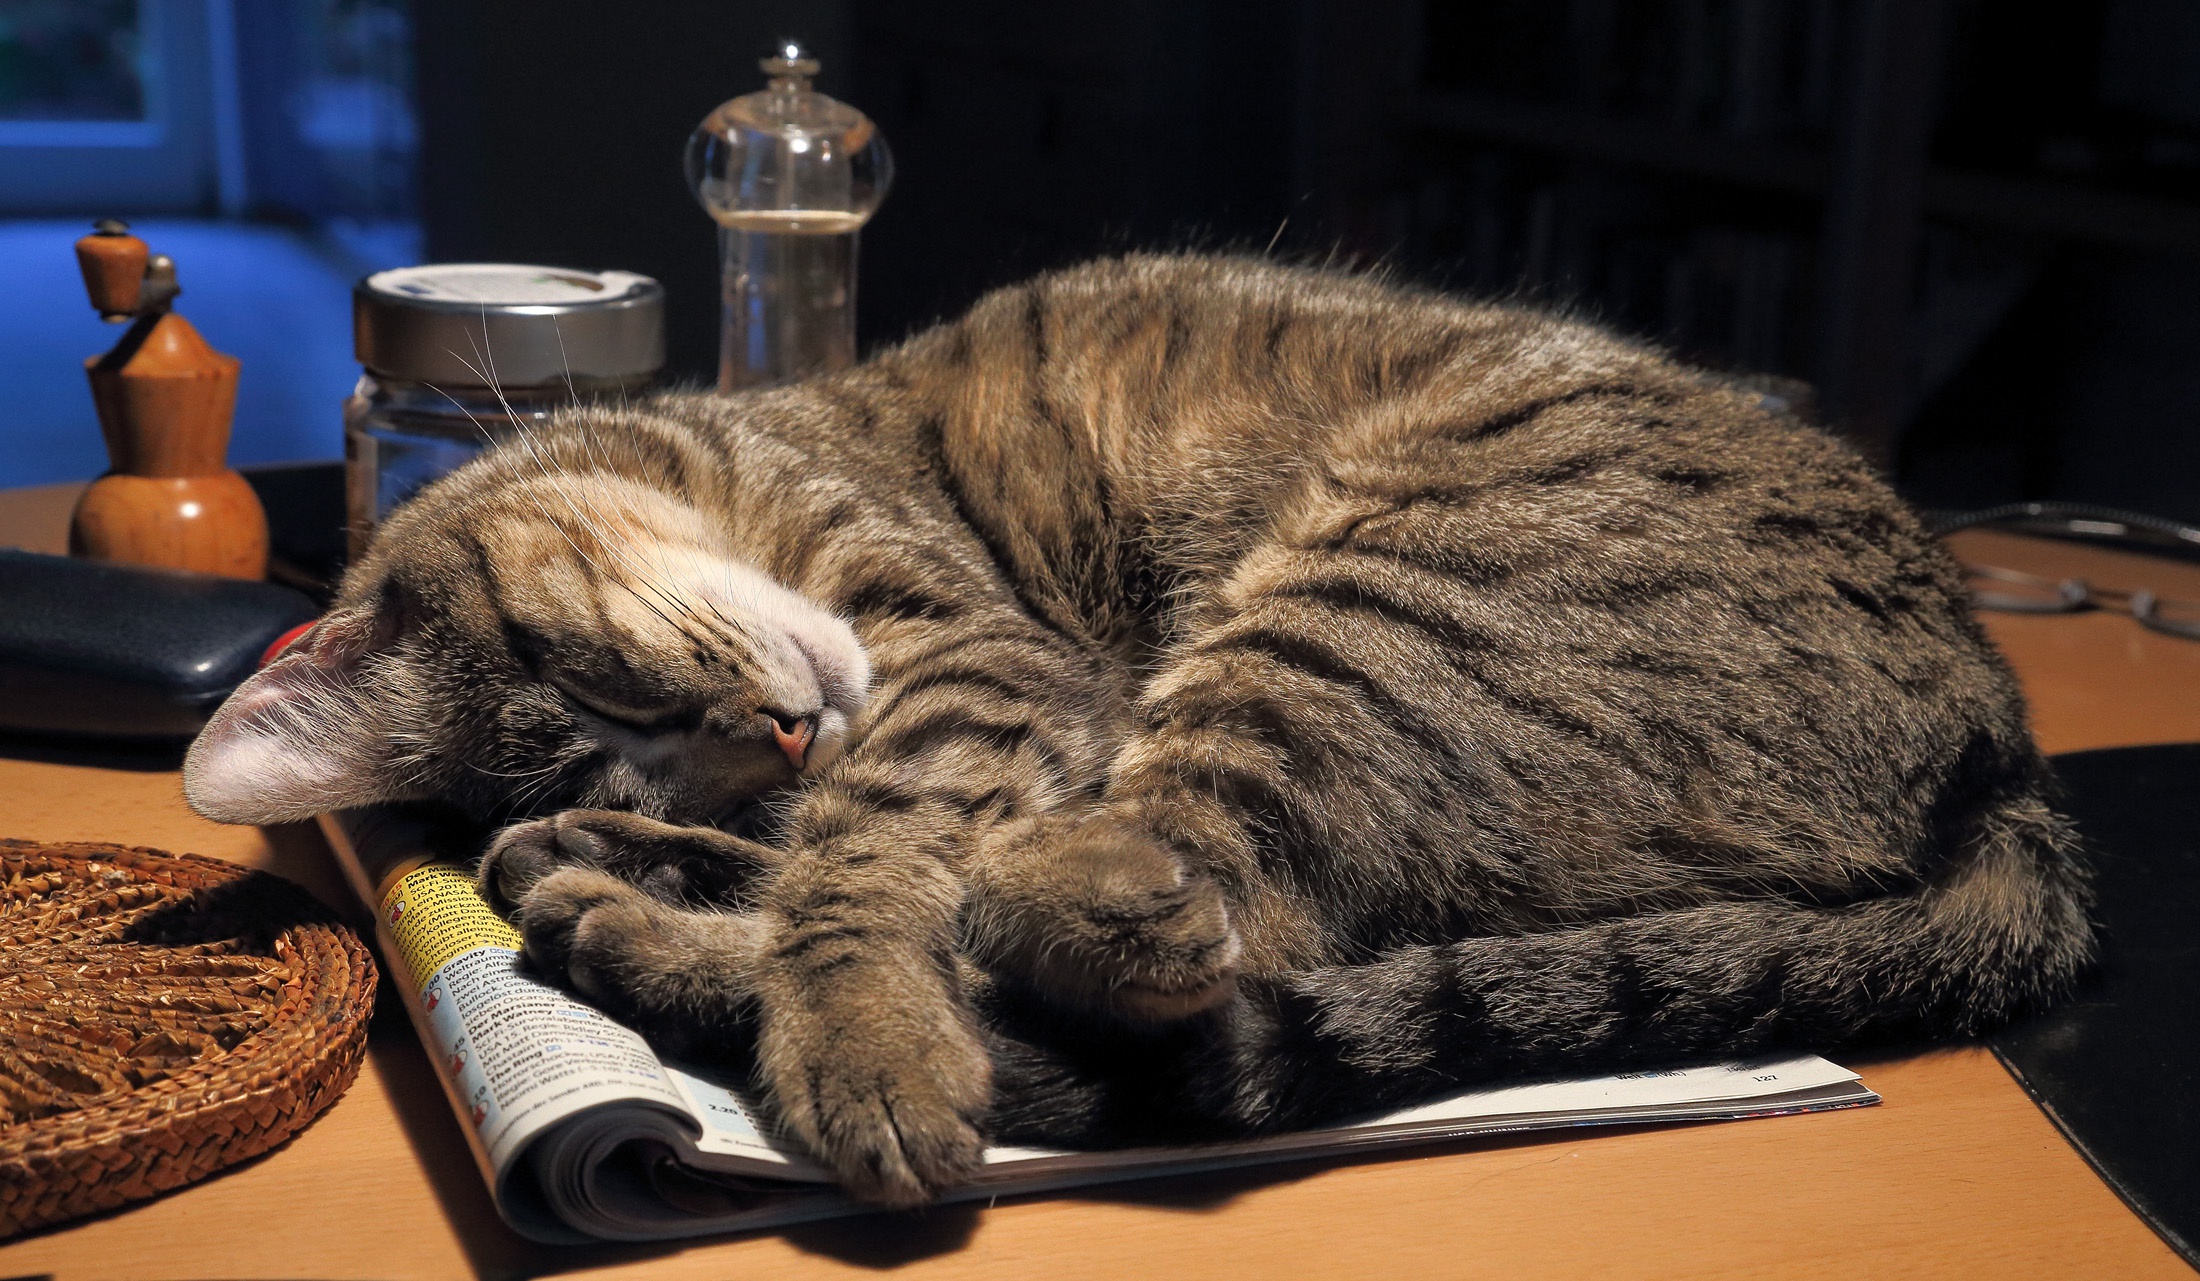 Free download wallpaper Cats, Cat, Animal, Sleeping on your PC desktop